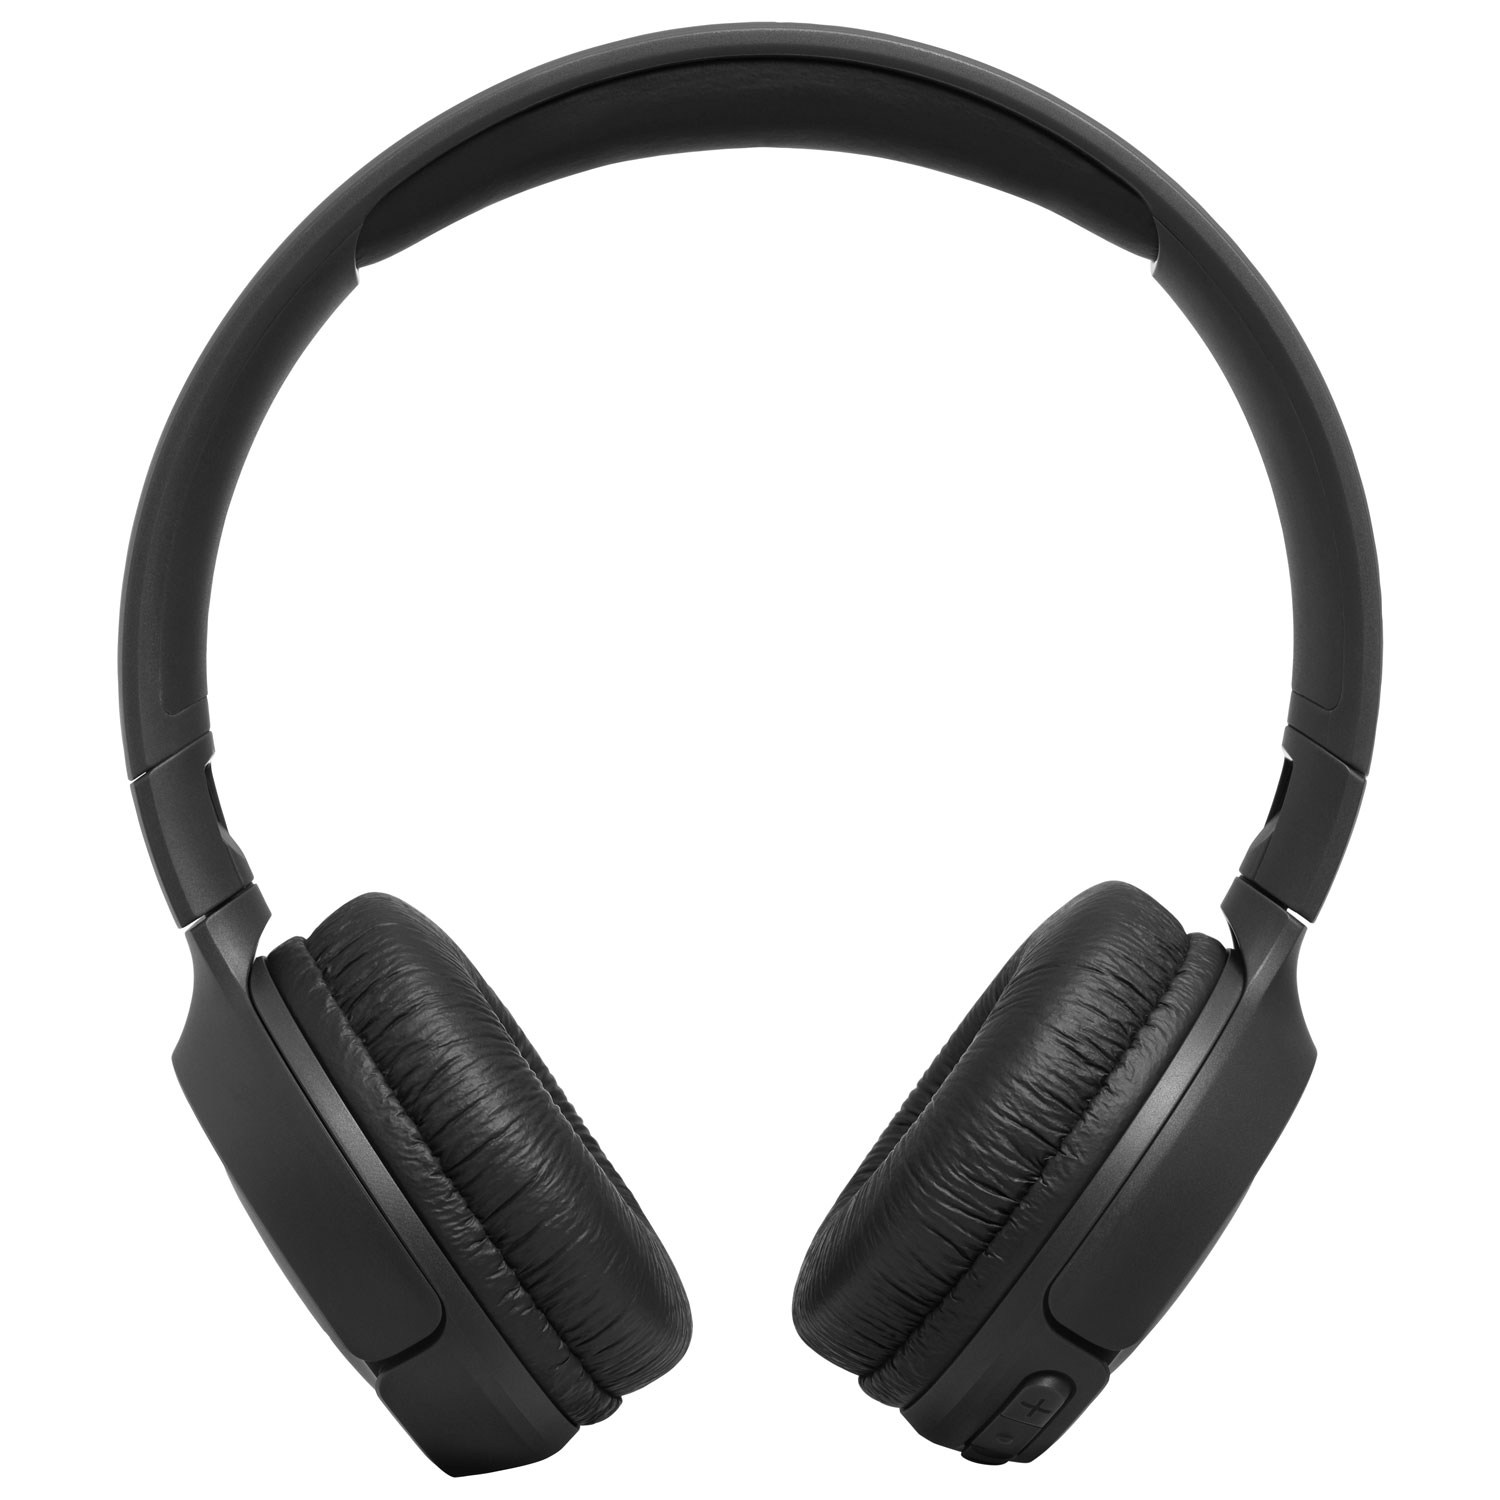 JBL Under Armour Sport Train Wireless On-Ear Headphones Black / Red  UAONEARBTBKR - Best Buy